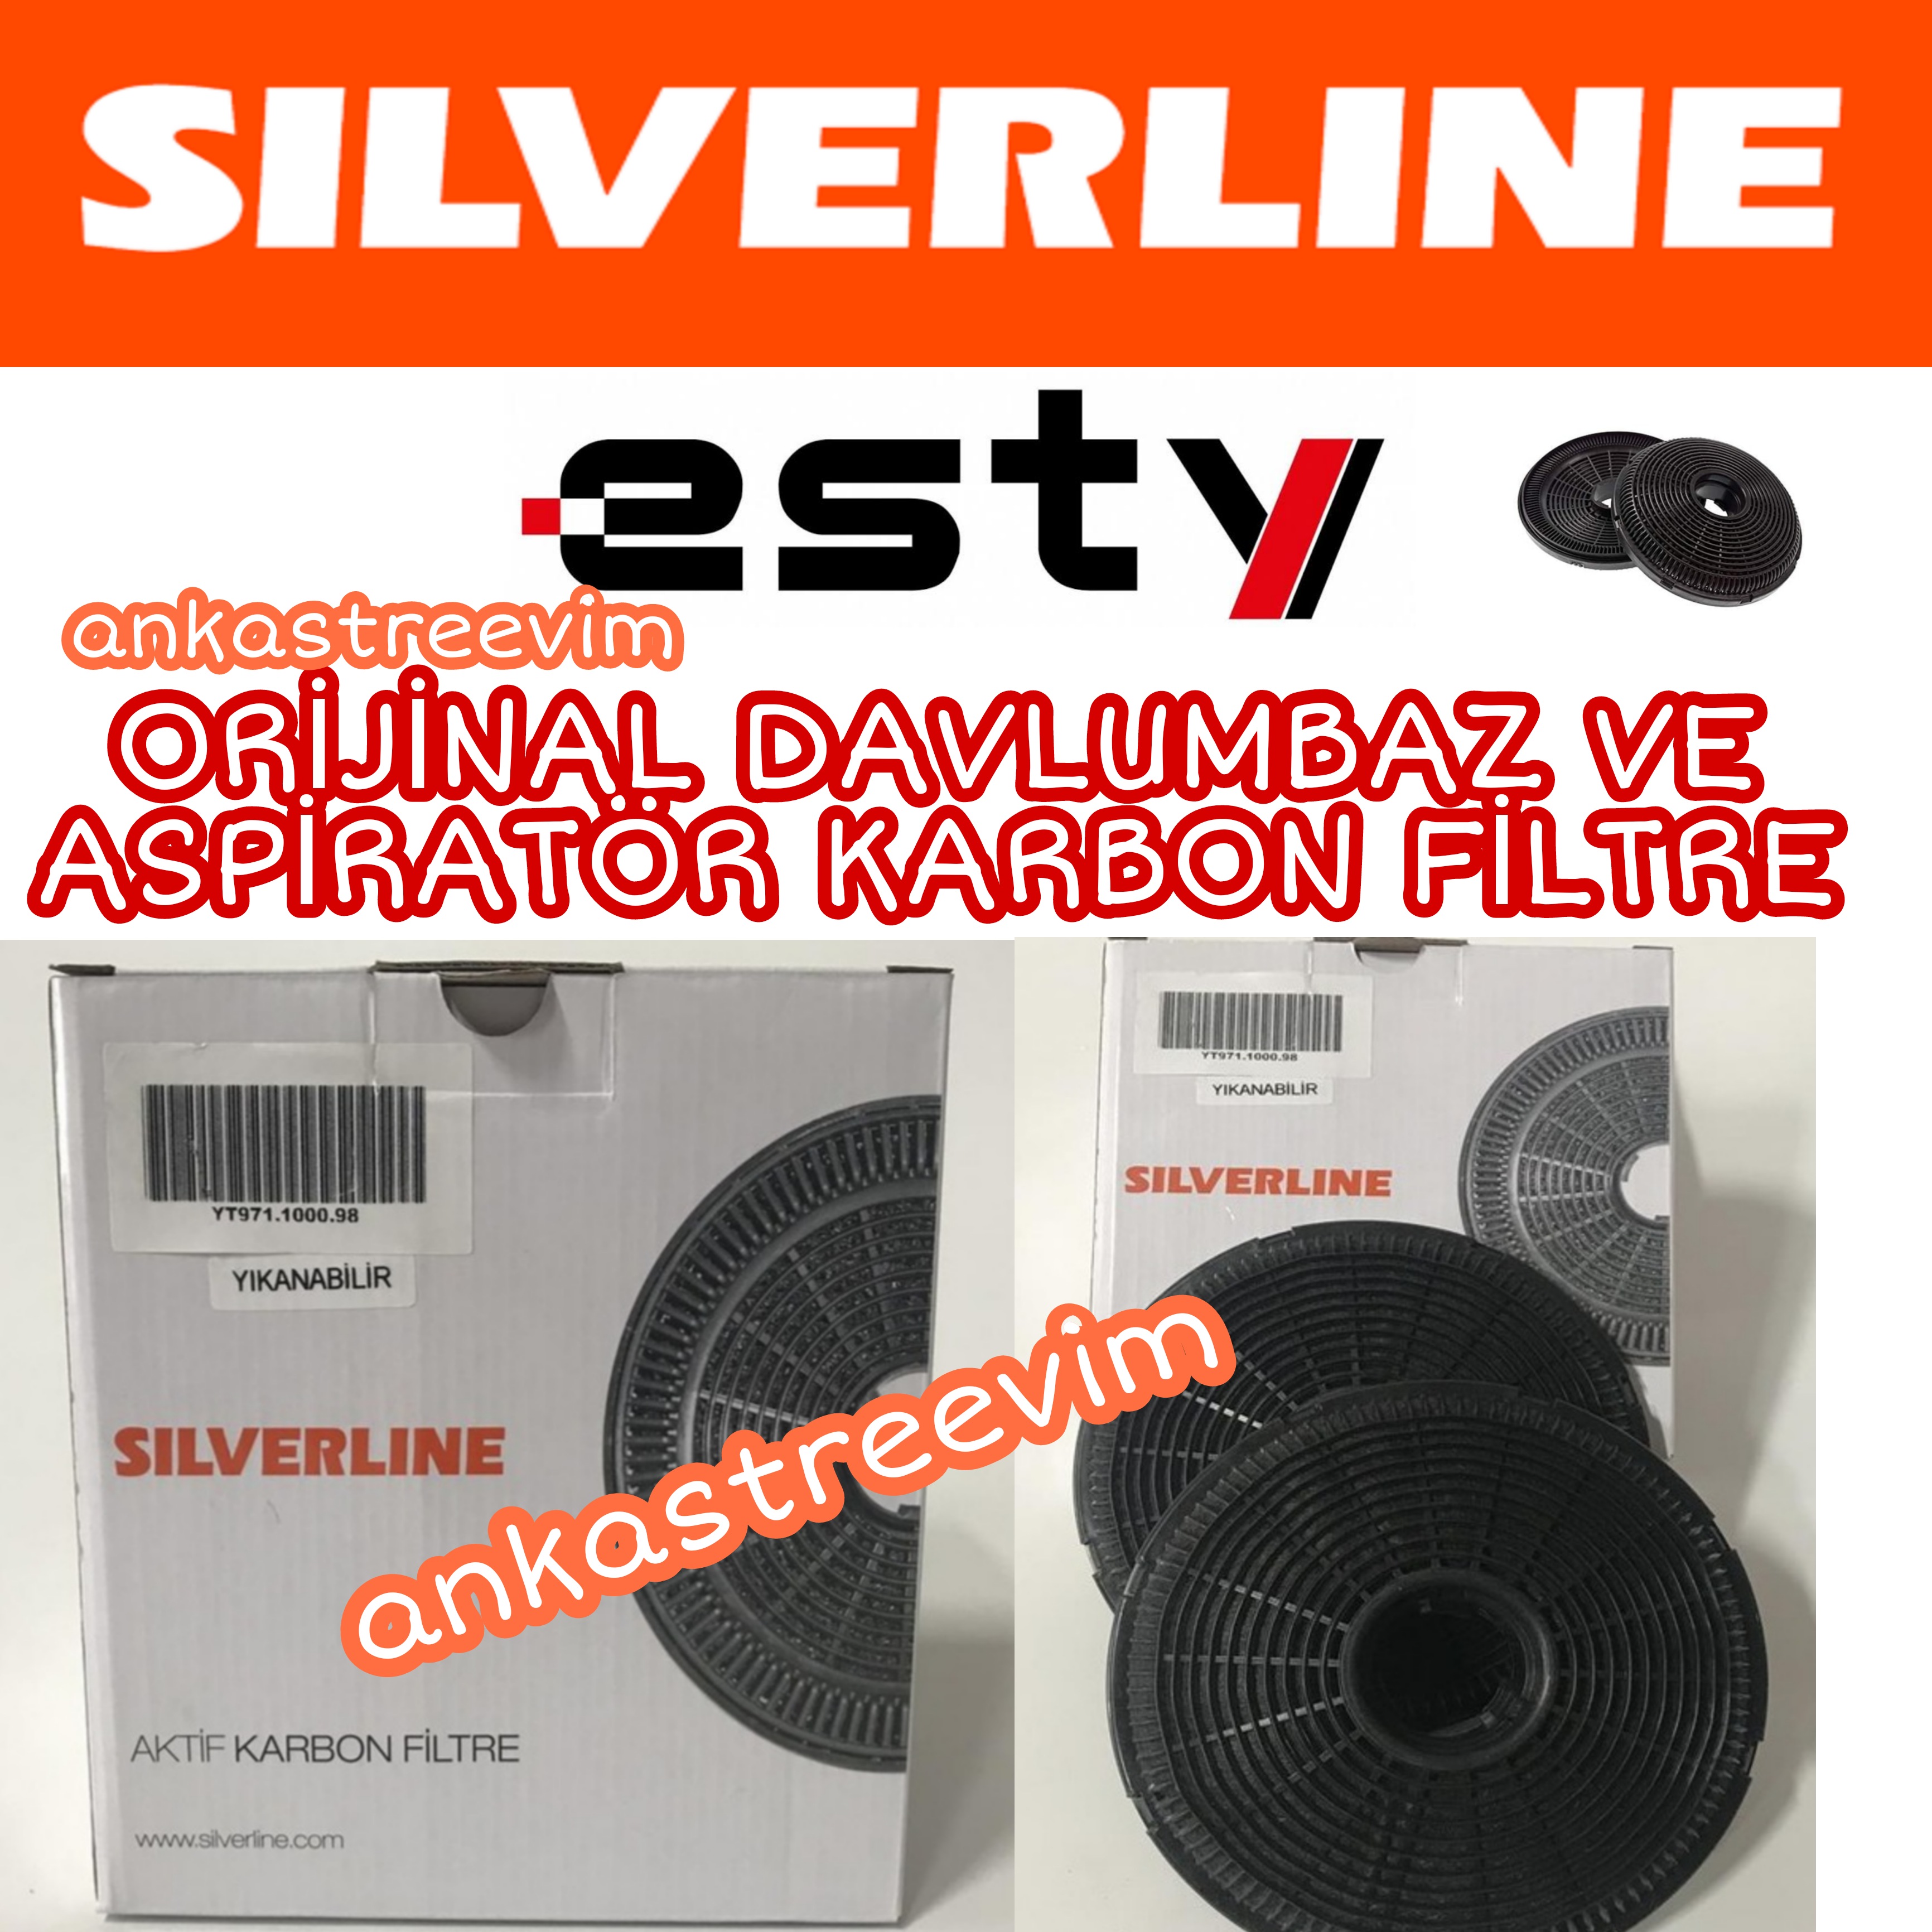 Silverline Esty Davlumbaz Orijinal Yeni Nesil Karbon Filtre 16 cm